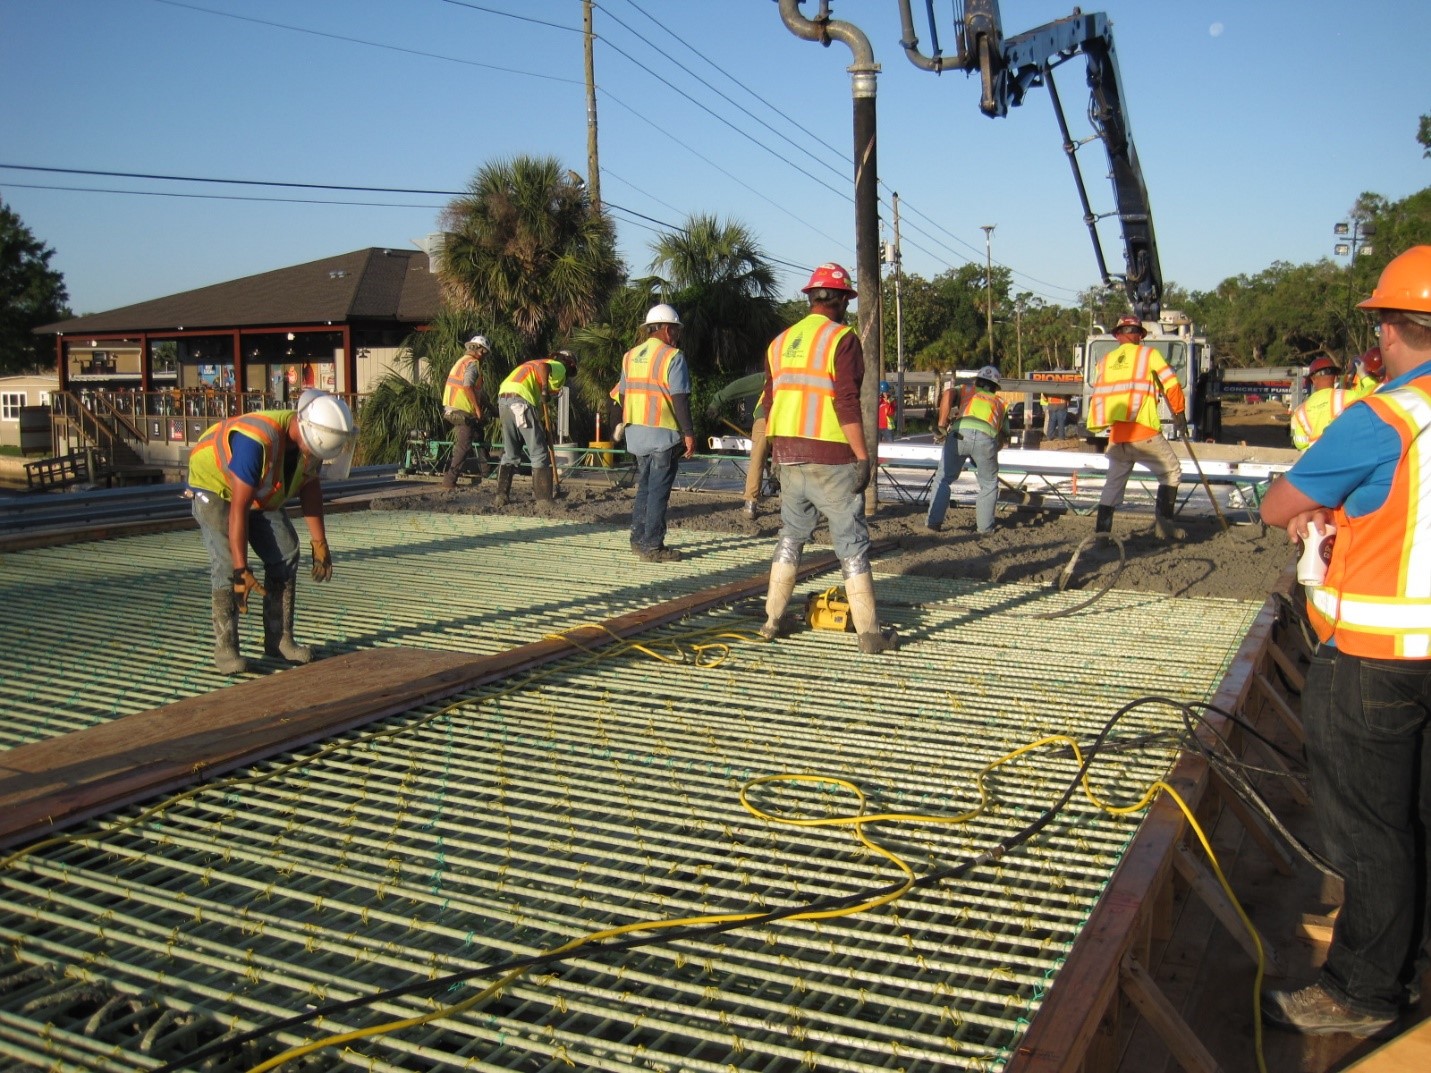 Image 2: This picture depicts casting of GFRP reinforced concrete bridge deck.